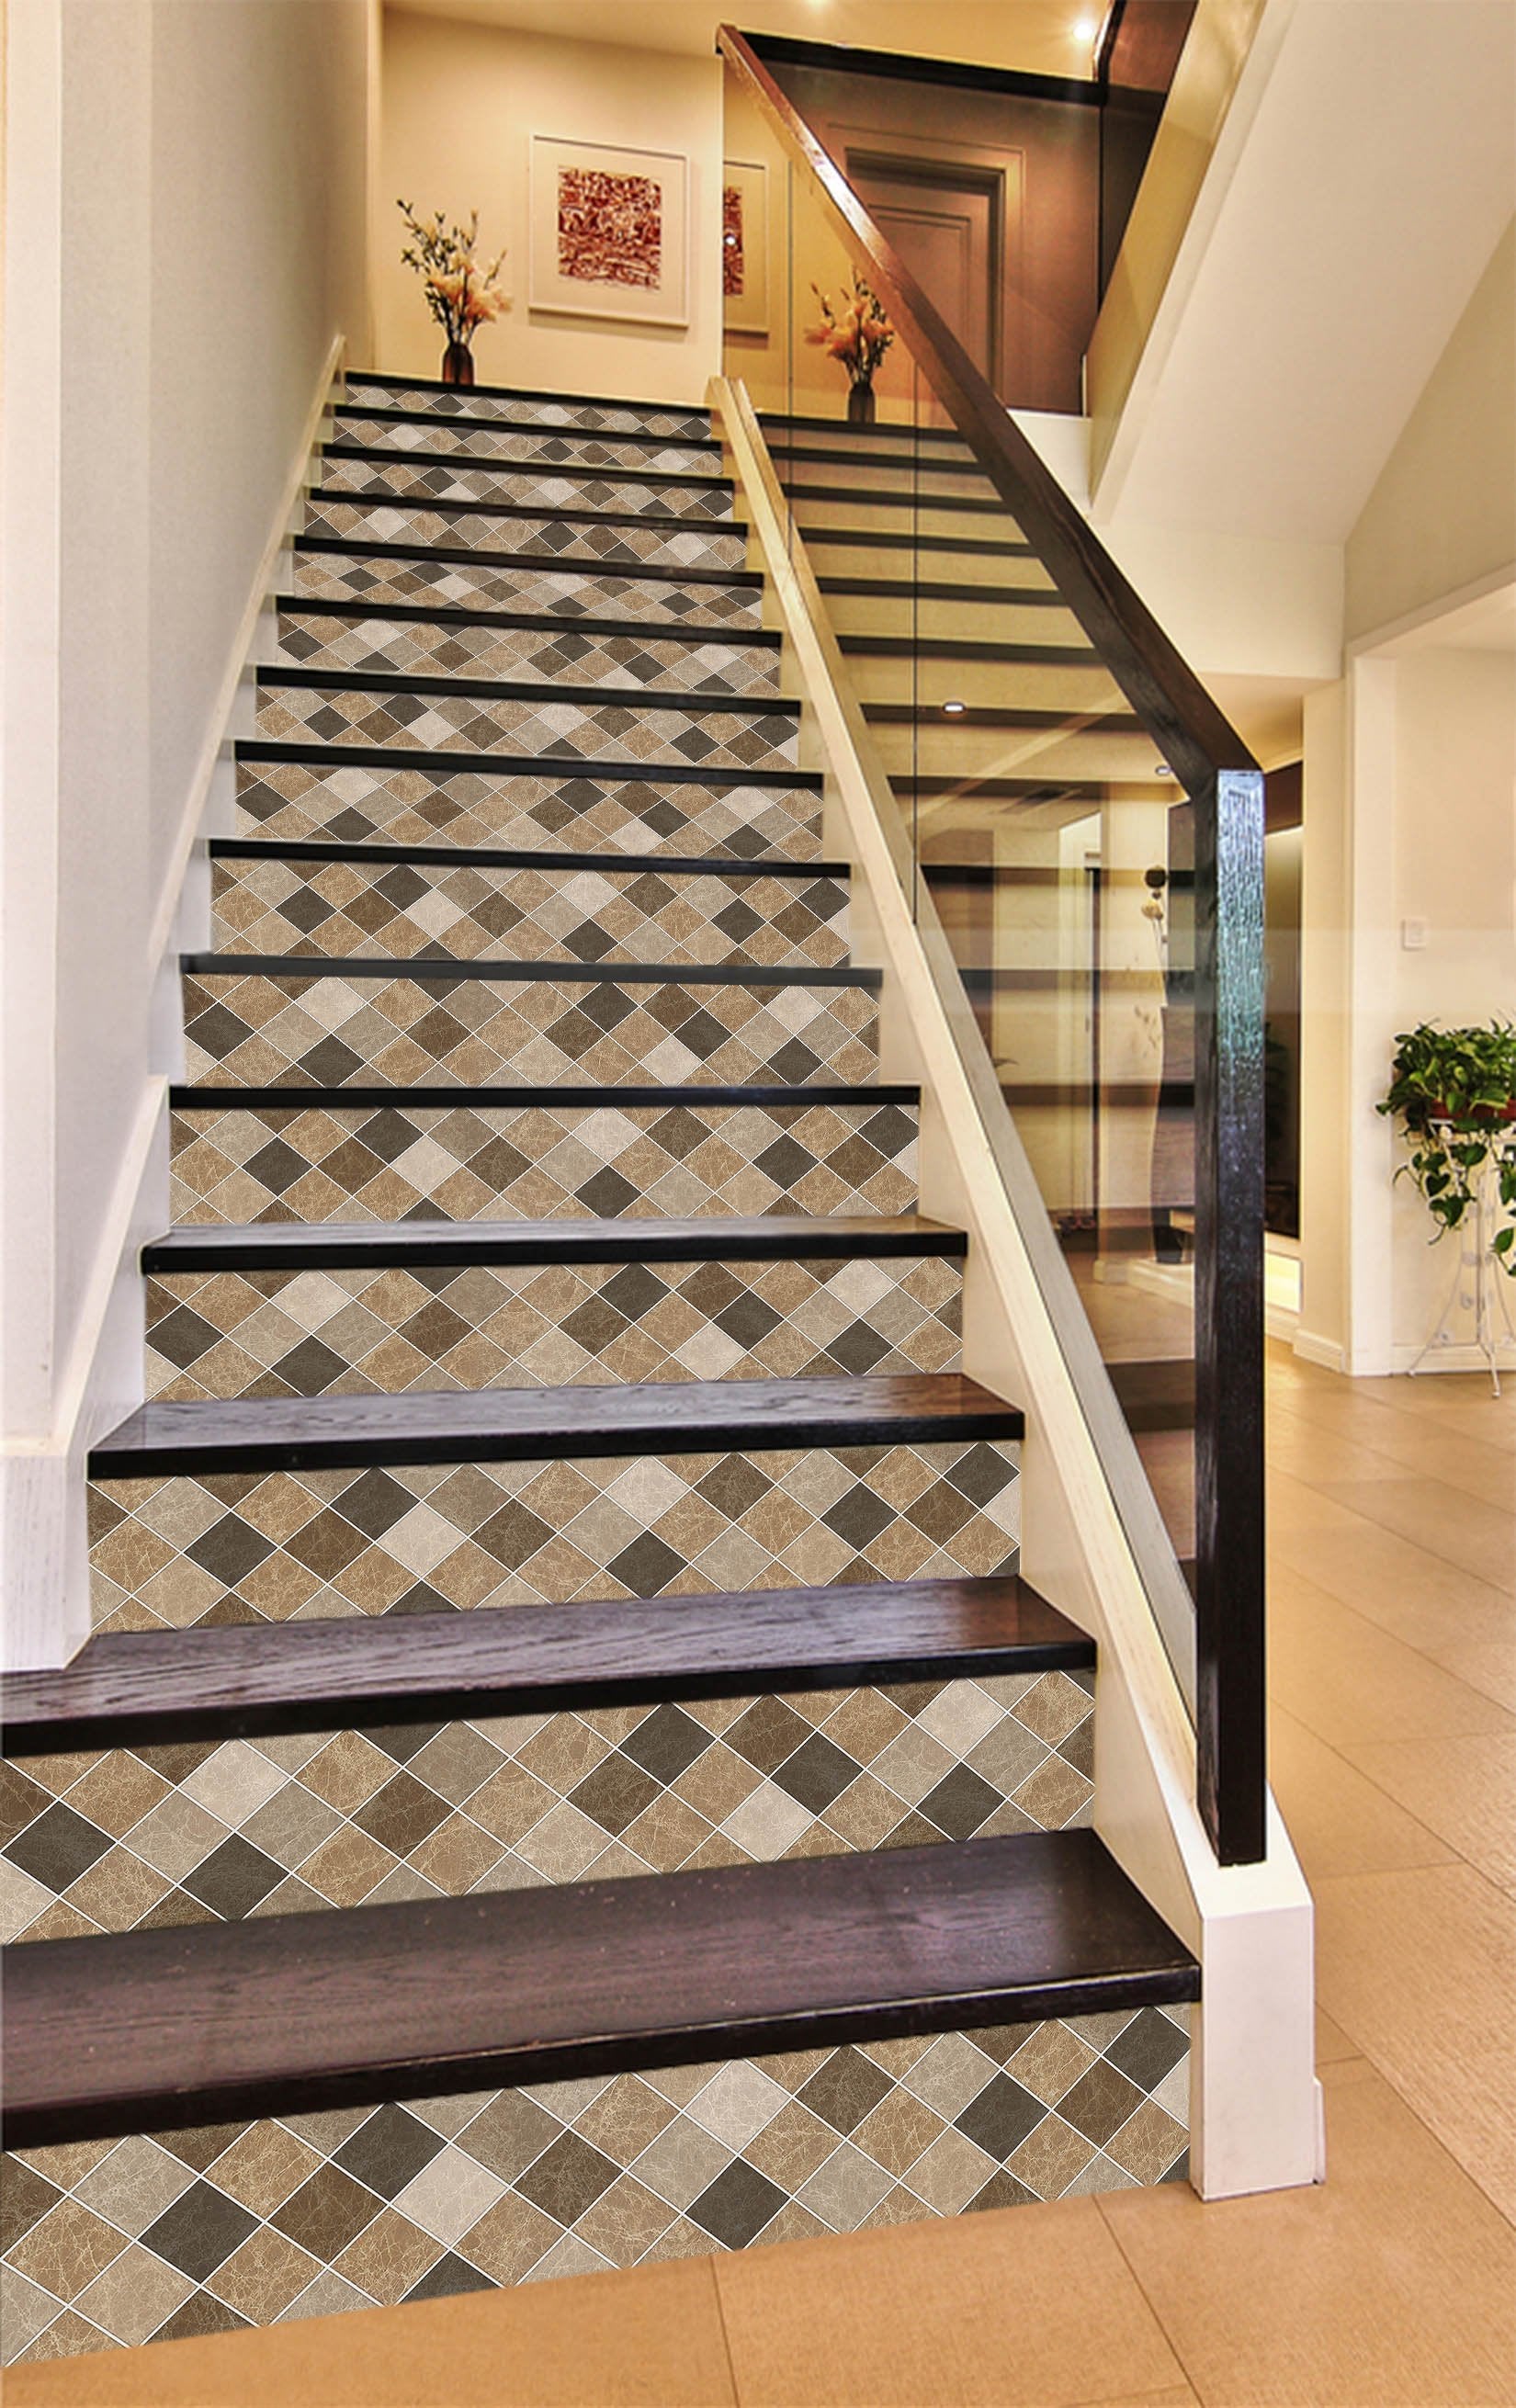 3D Diamond Mosaic 0684 Marble Tile Texture Stair Risers Wallpaper AJ Wallpaper 